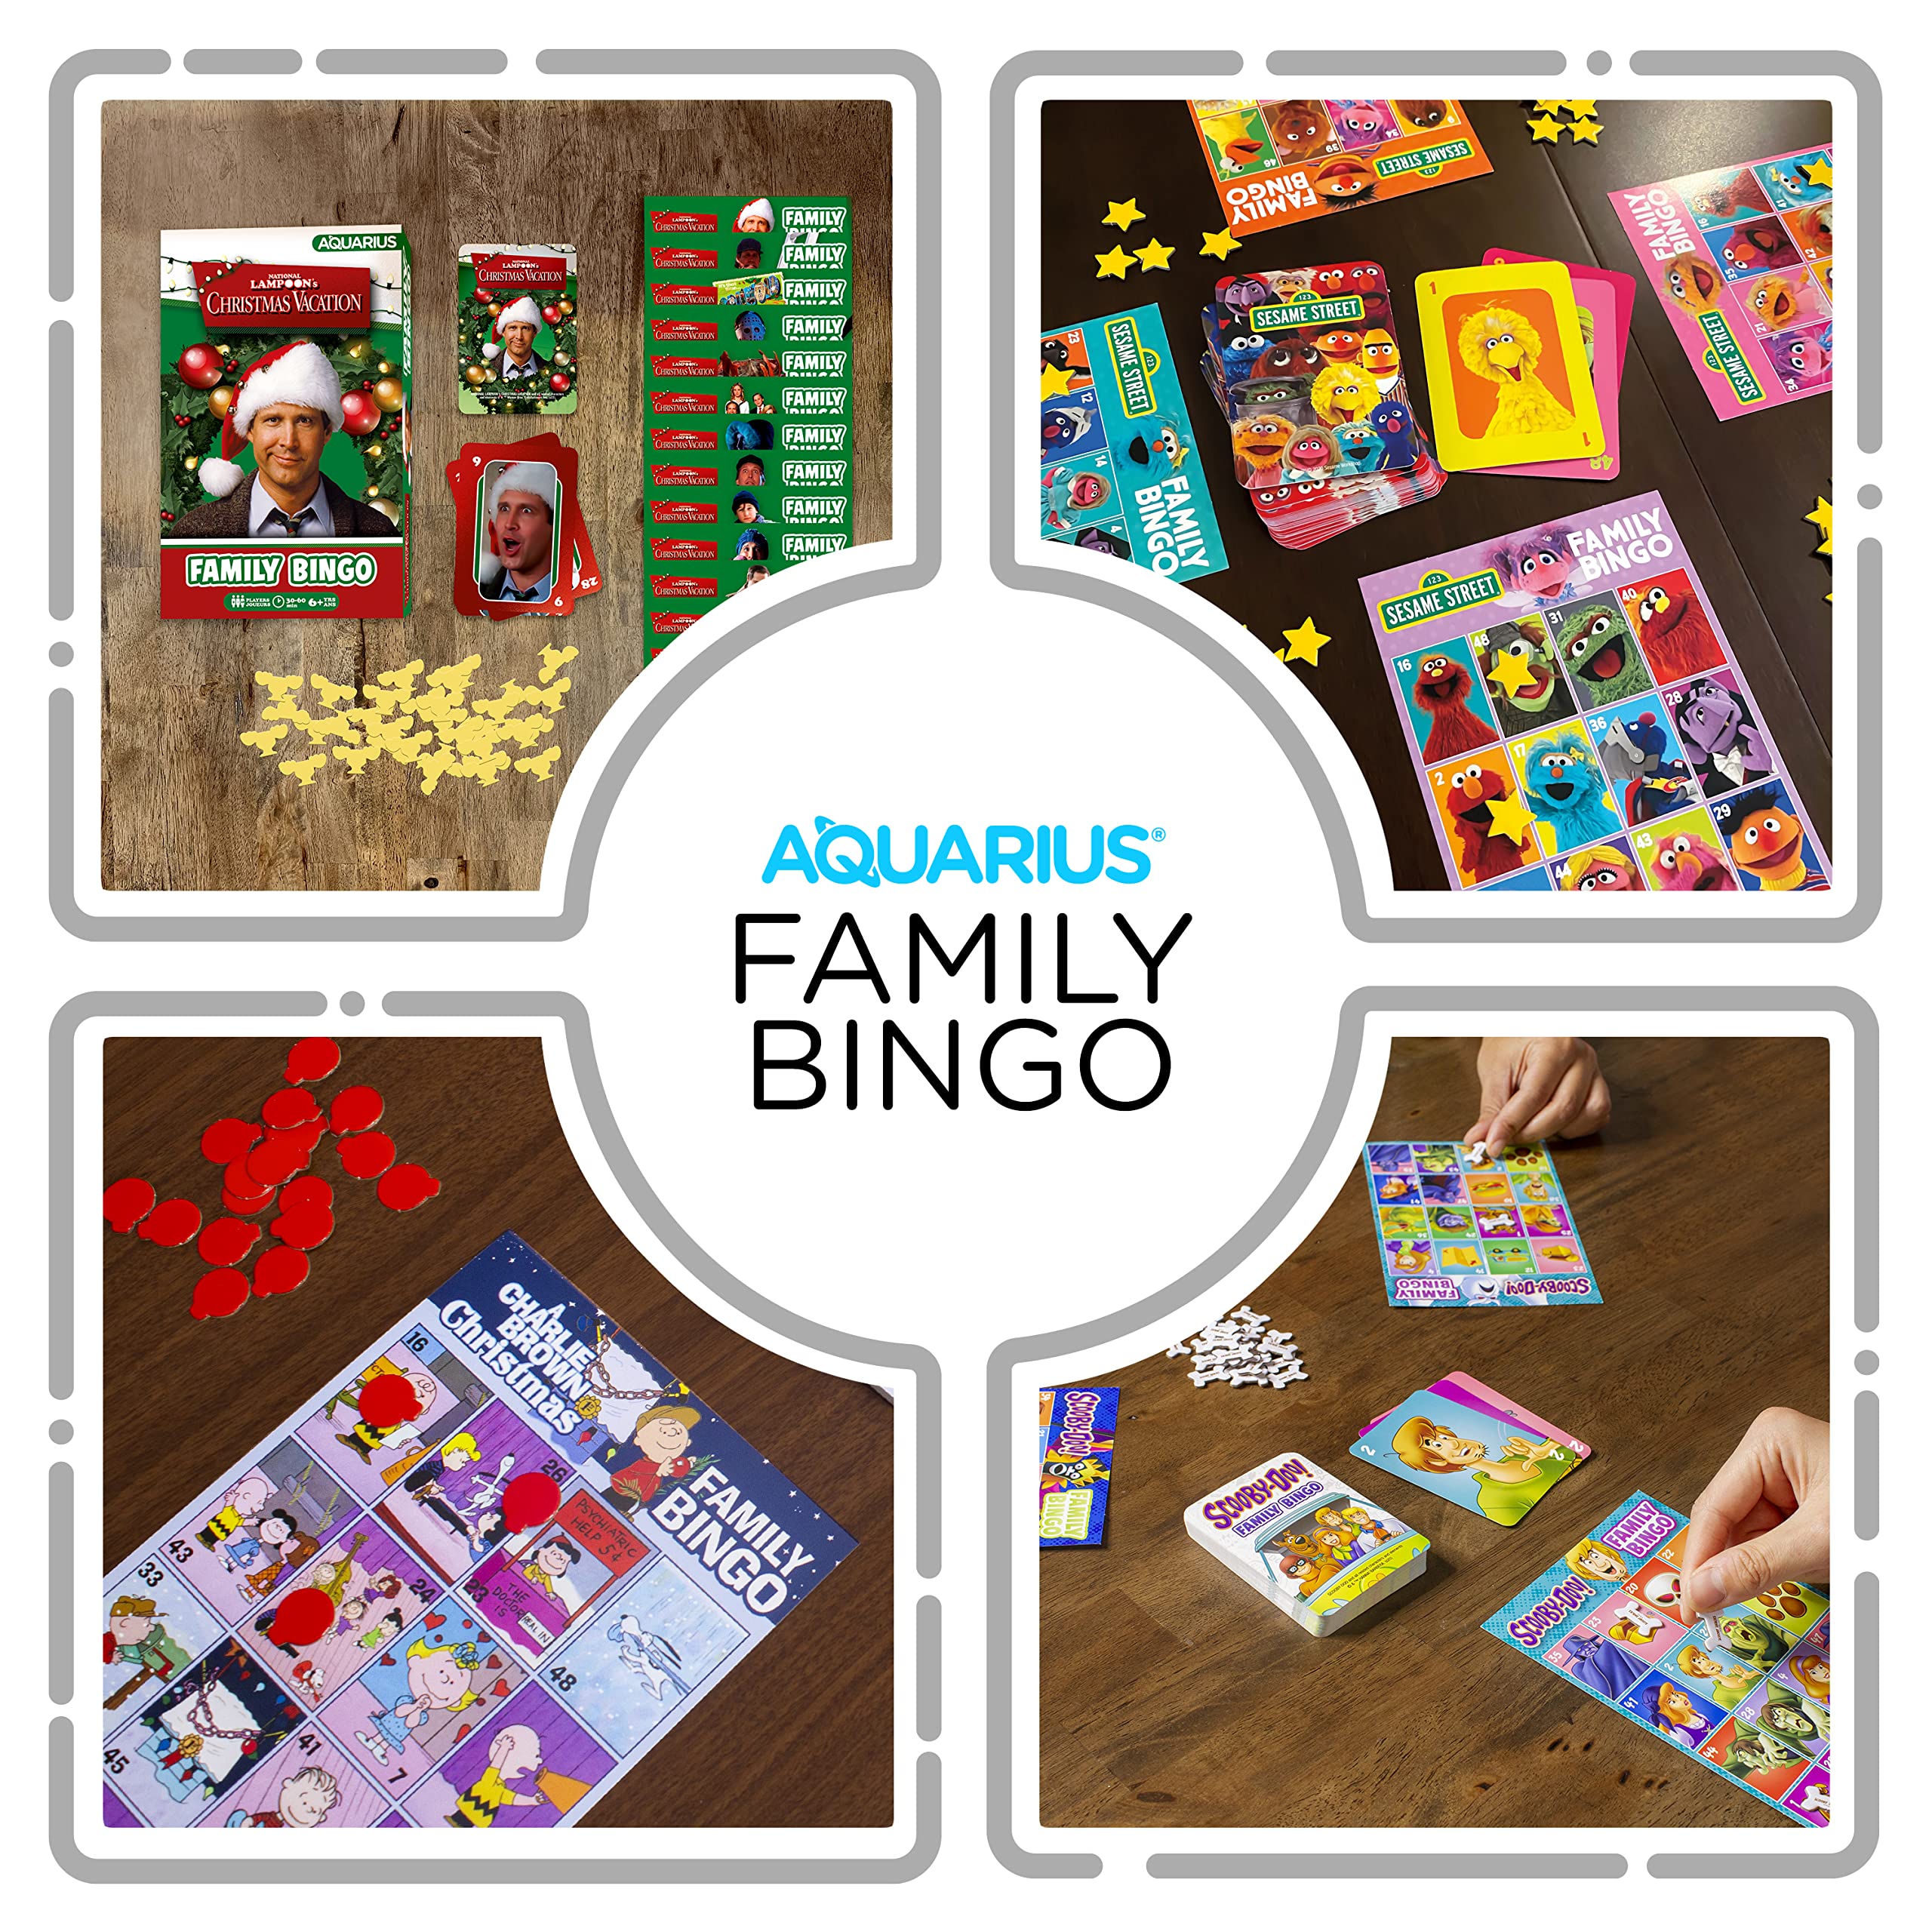 AQUARIUS - Christmas Vacation Family Bingo Game